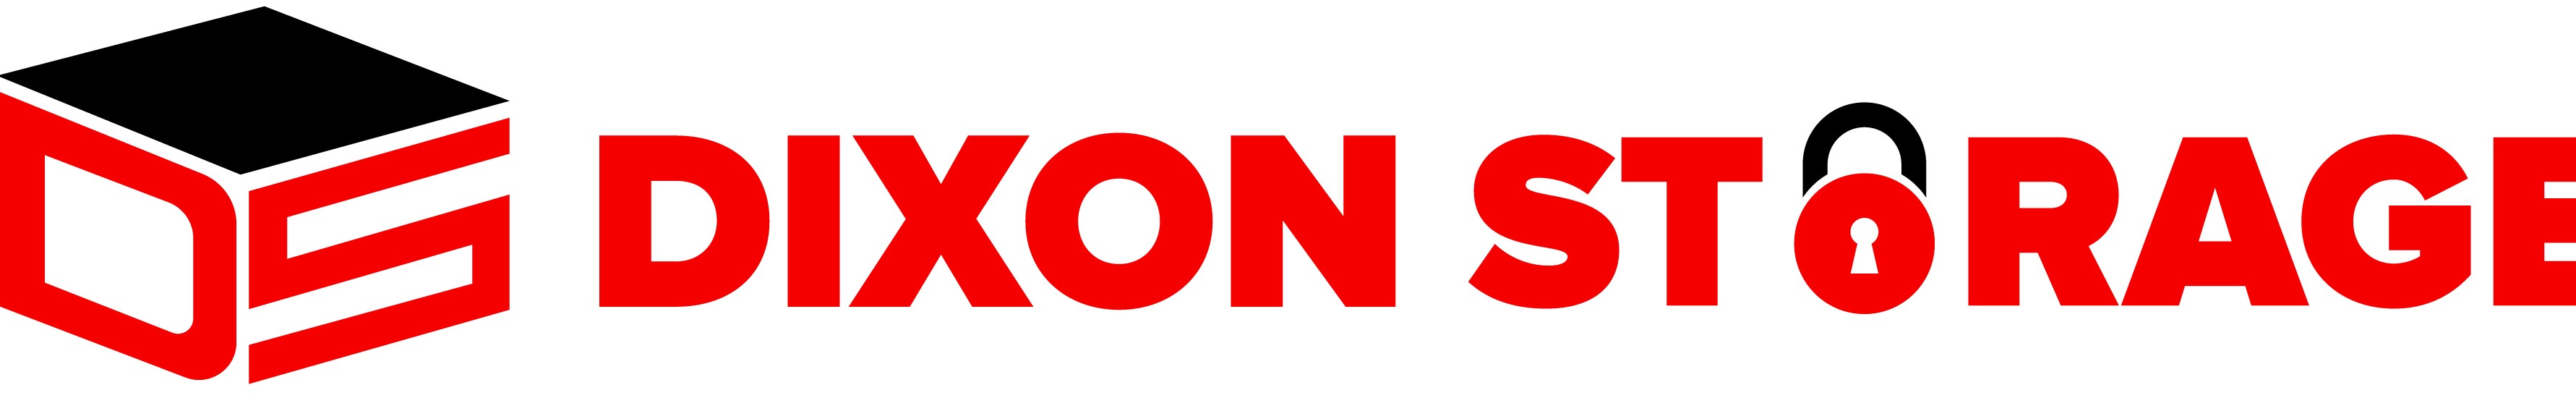 Dixon Storage Logo